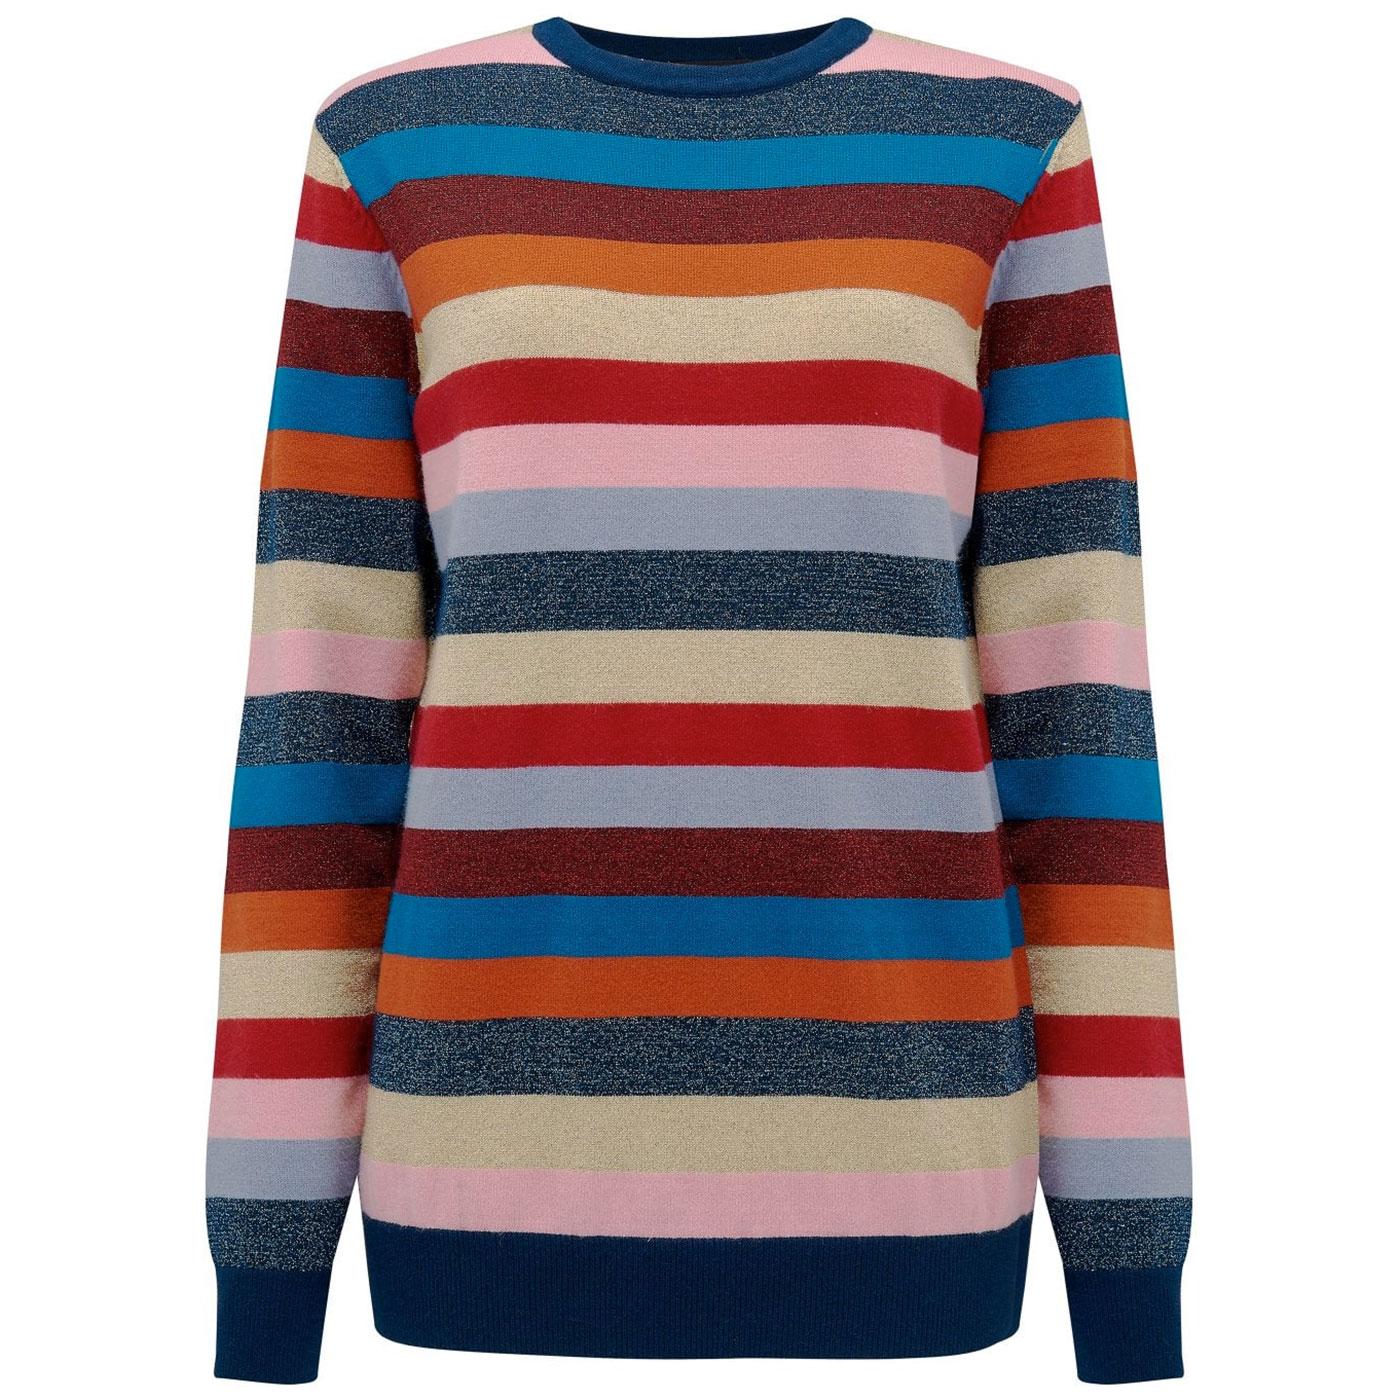 Poppy SUGARHILL Women's 70s Rainbow Stripe Sweater